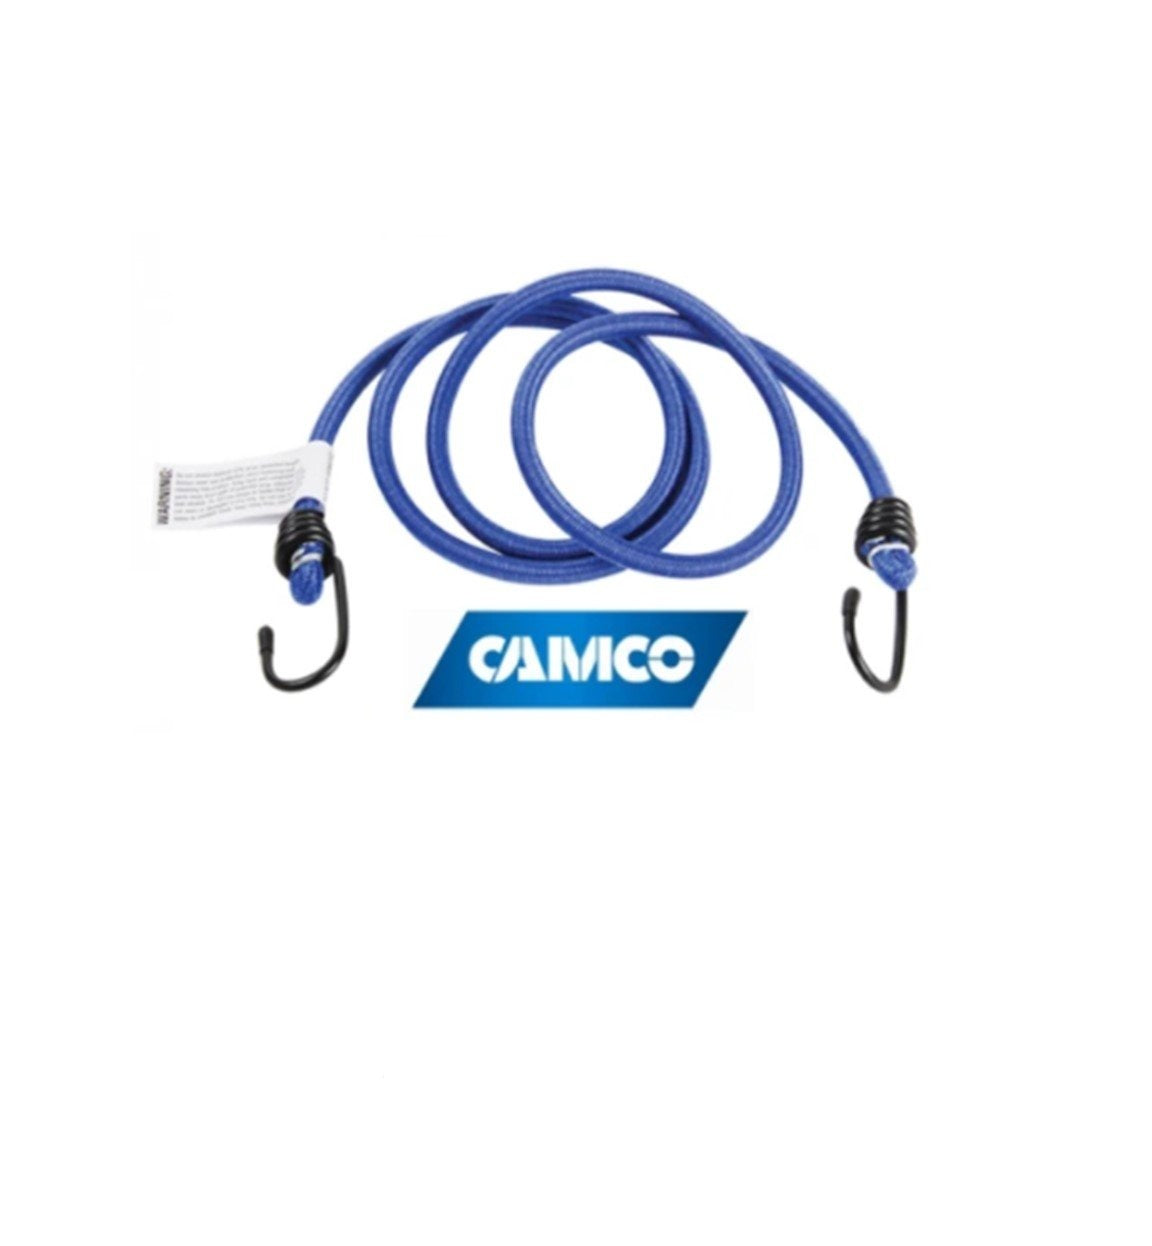 Camco Stretch Cord 50 Inch / 127cm